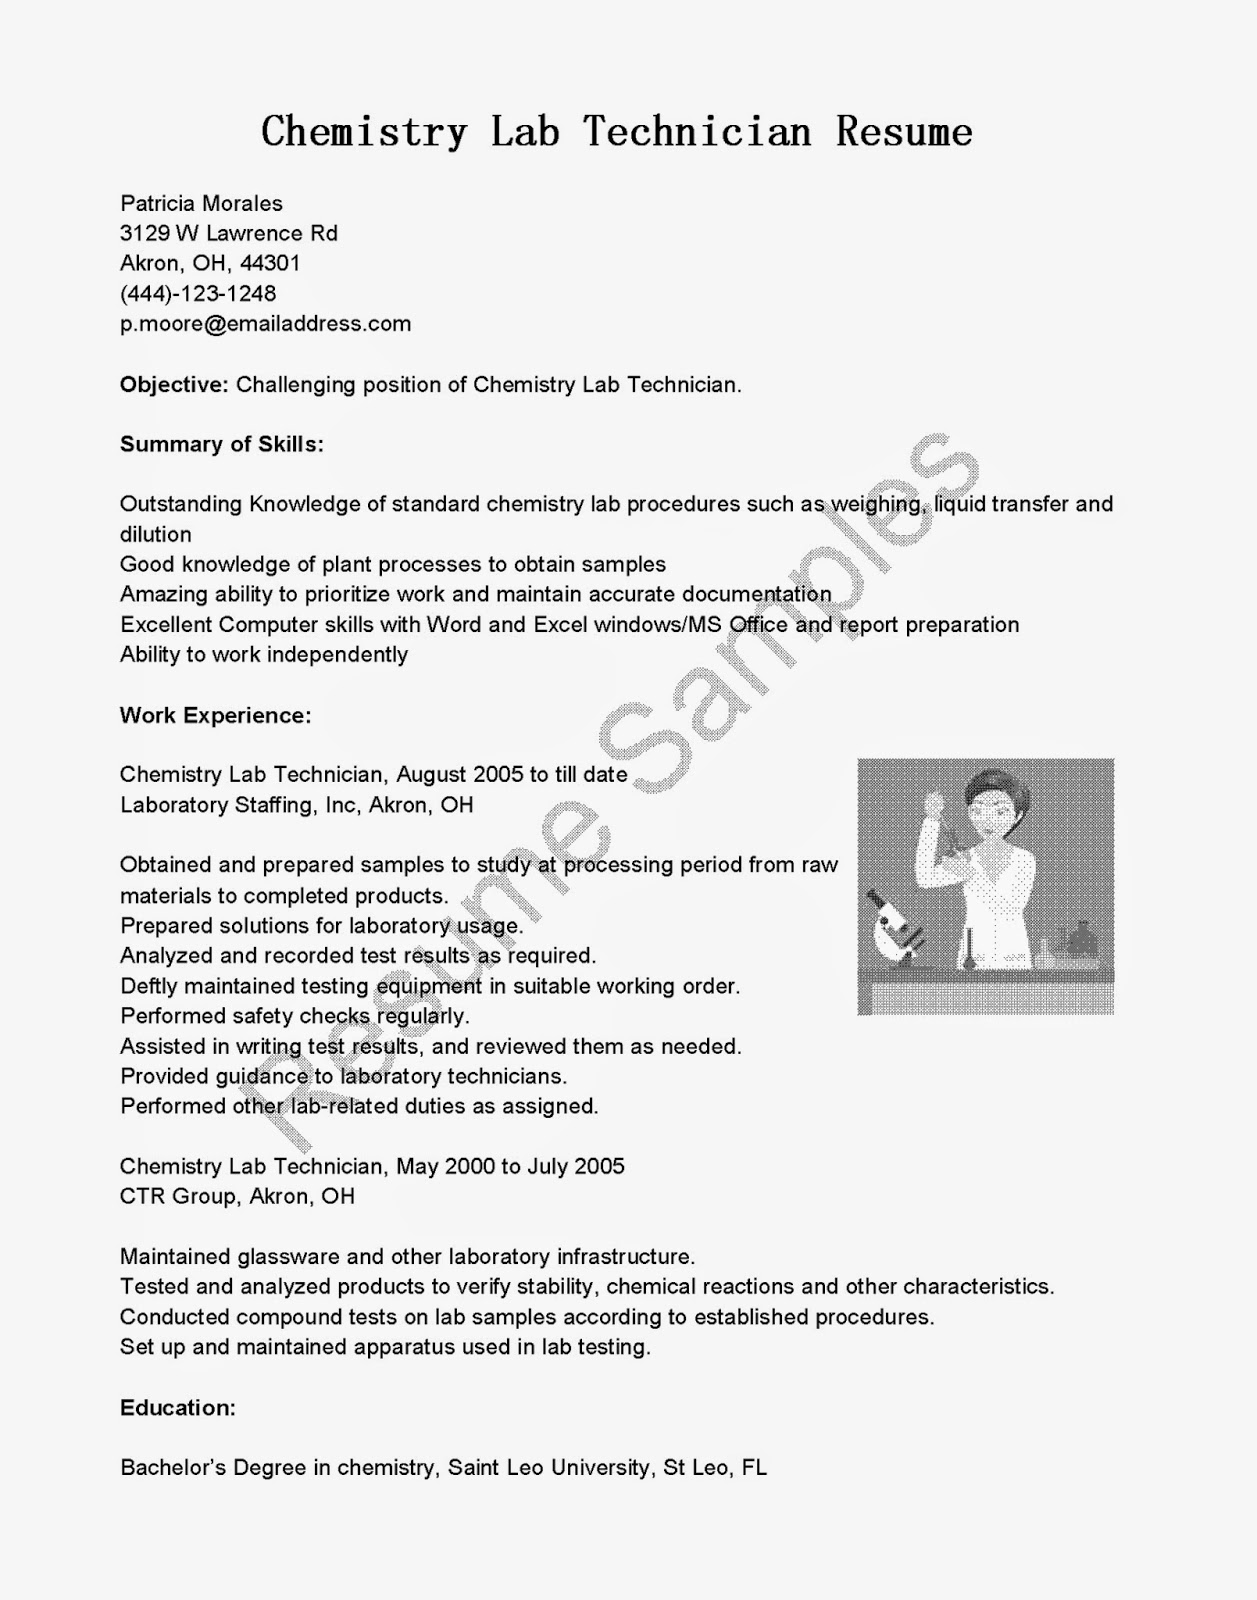 Water treatment technician resume